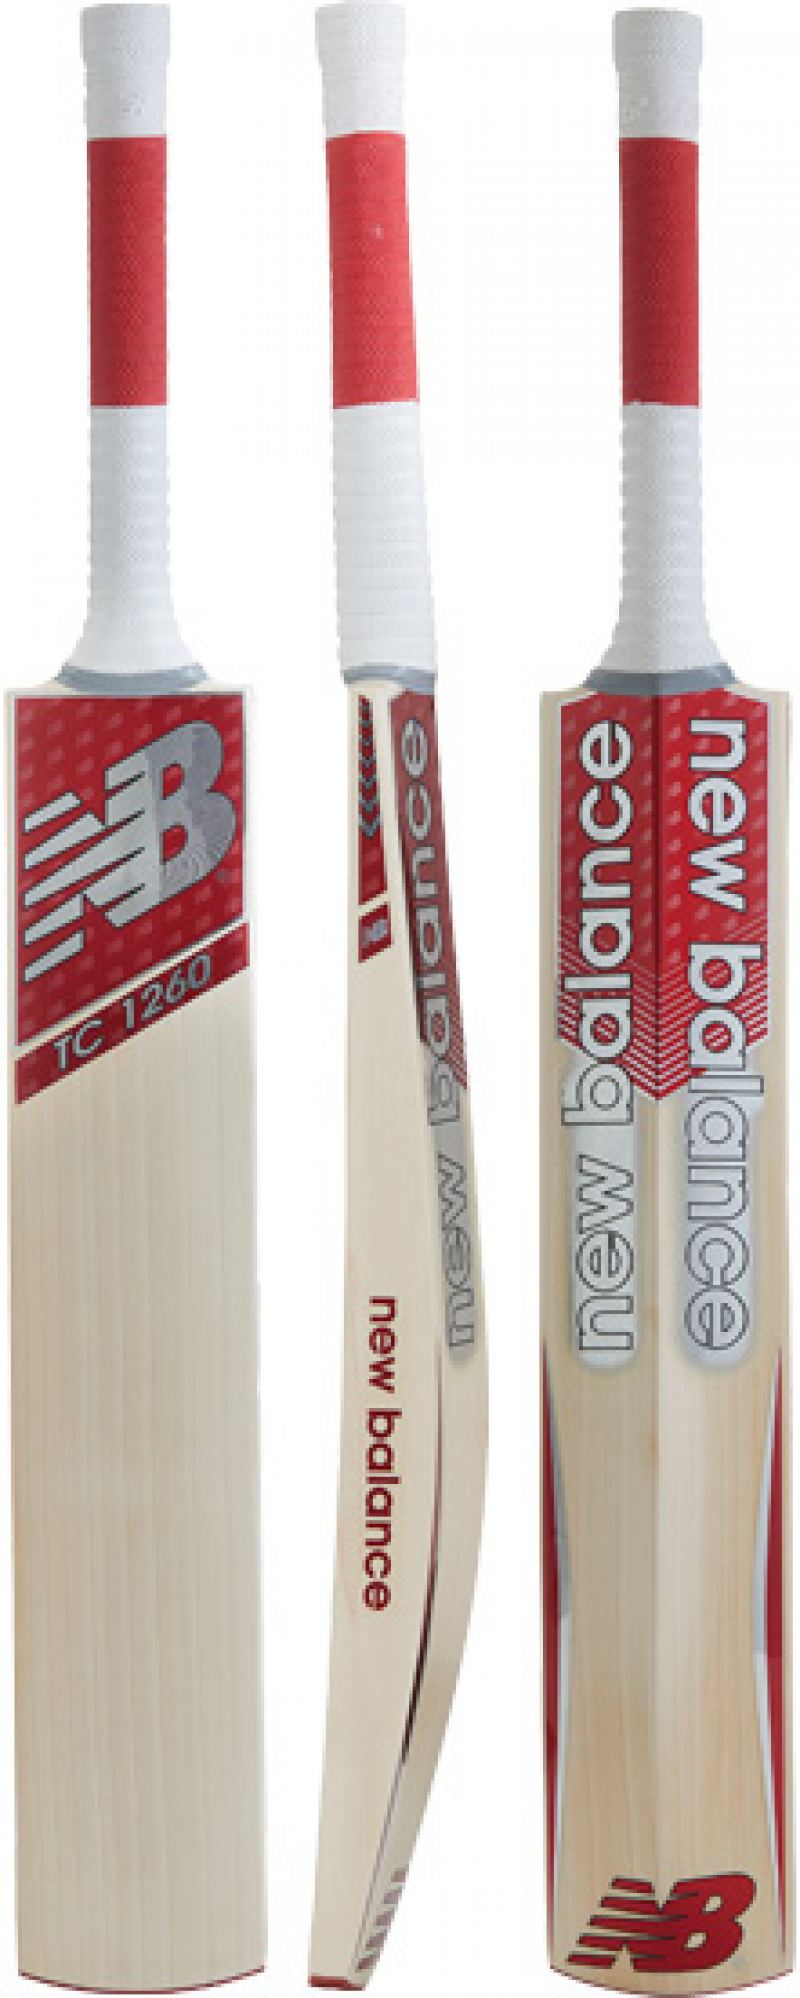 new balance tc 1260 limited edition cricket bat